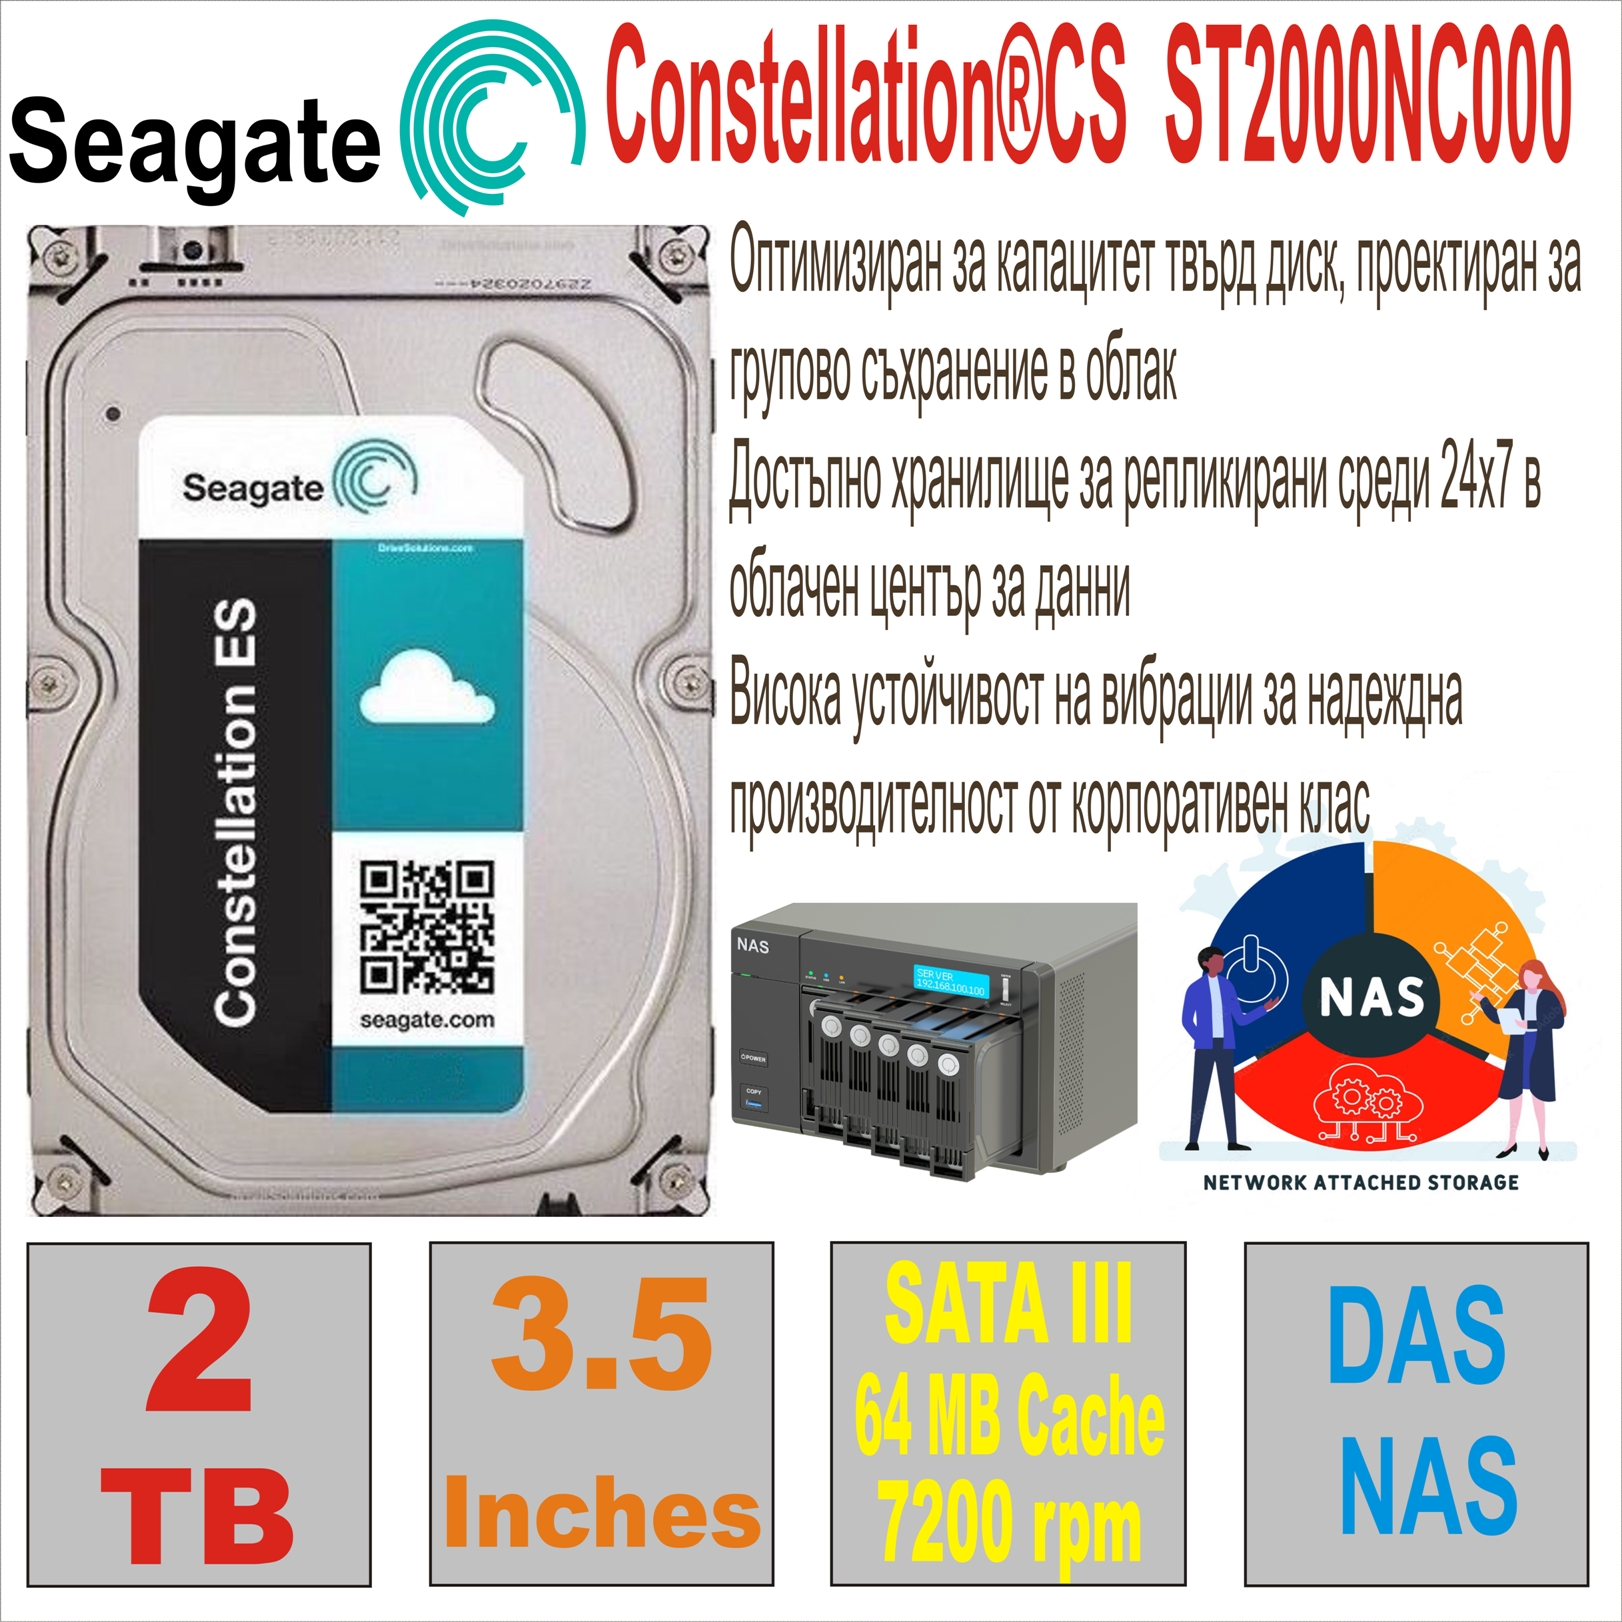 HDD 3.5` 2 TB SEAGATE Constellation ST2000NC000